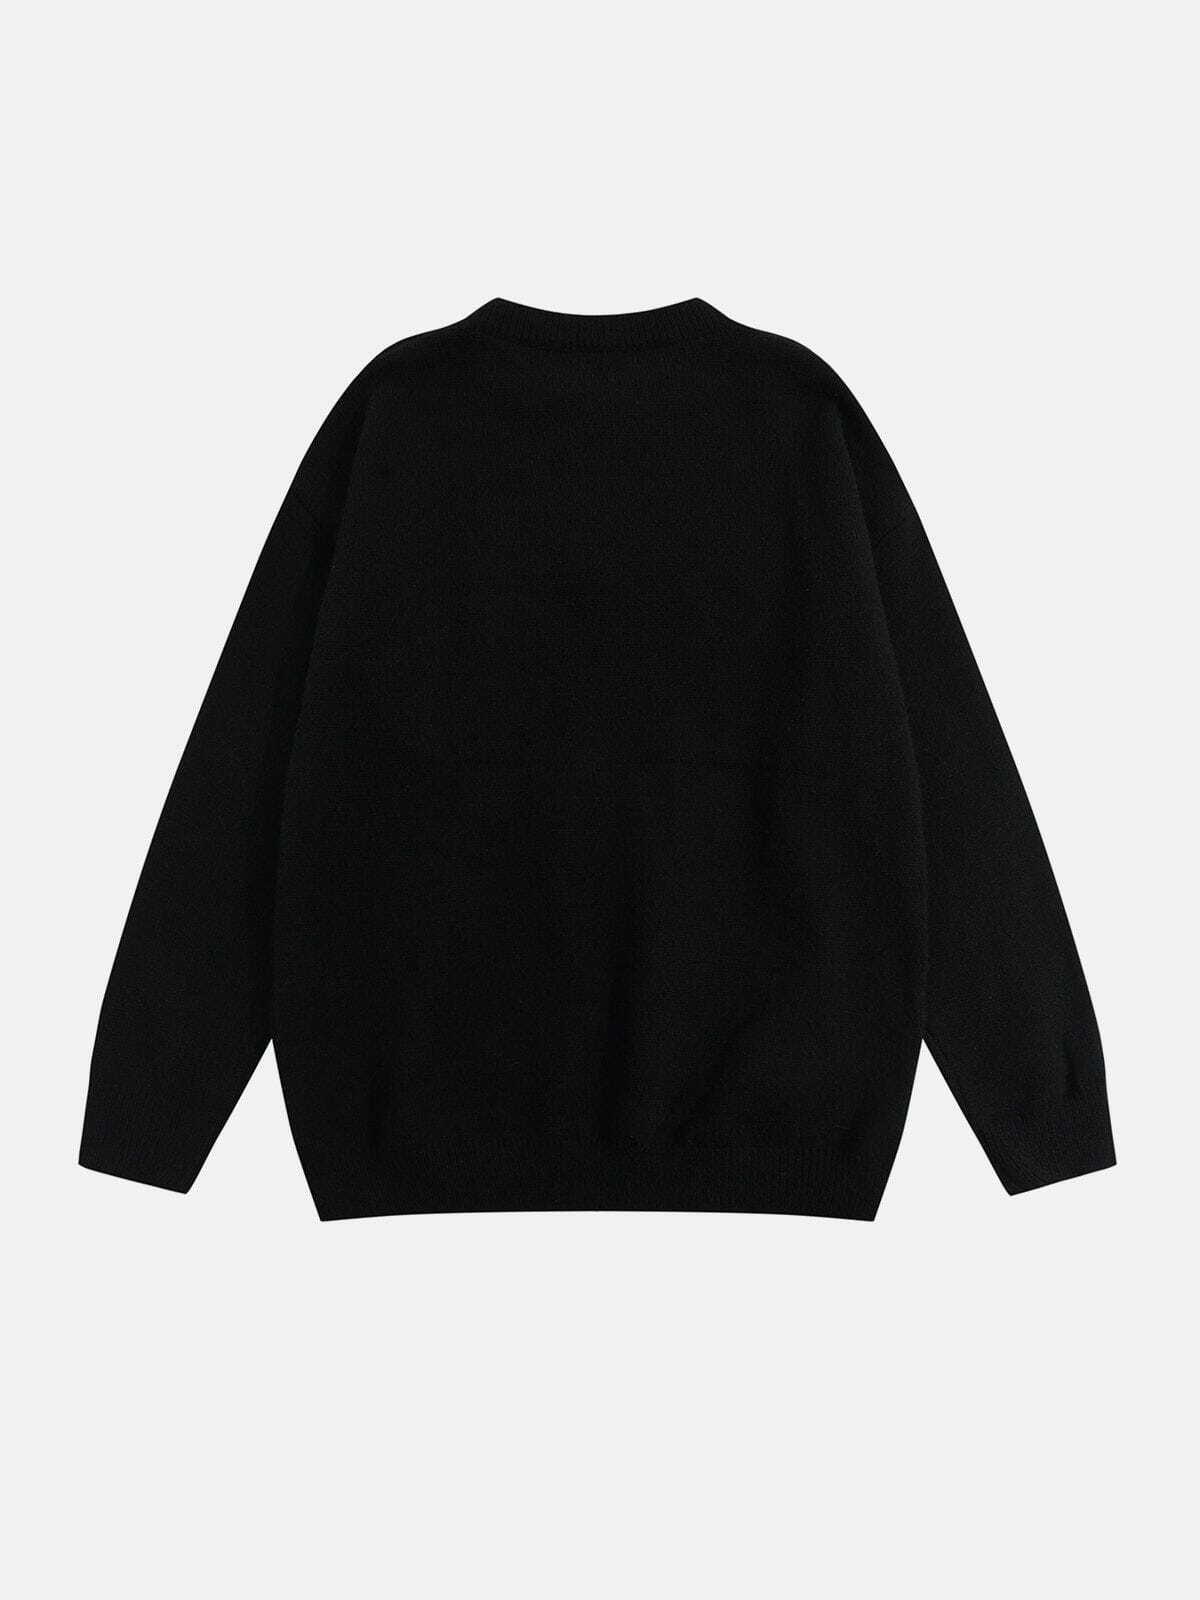 playful panda print sweater quirky & youthful streetwear 2291